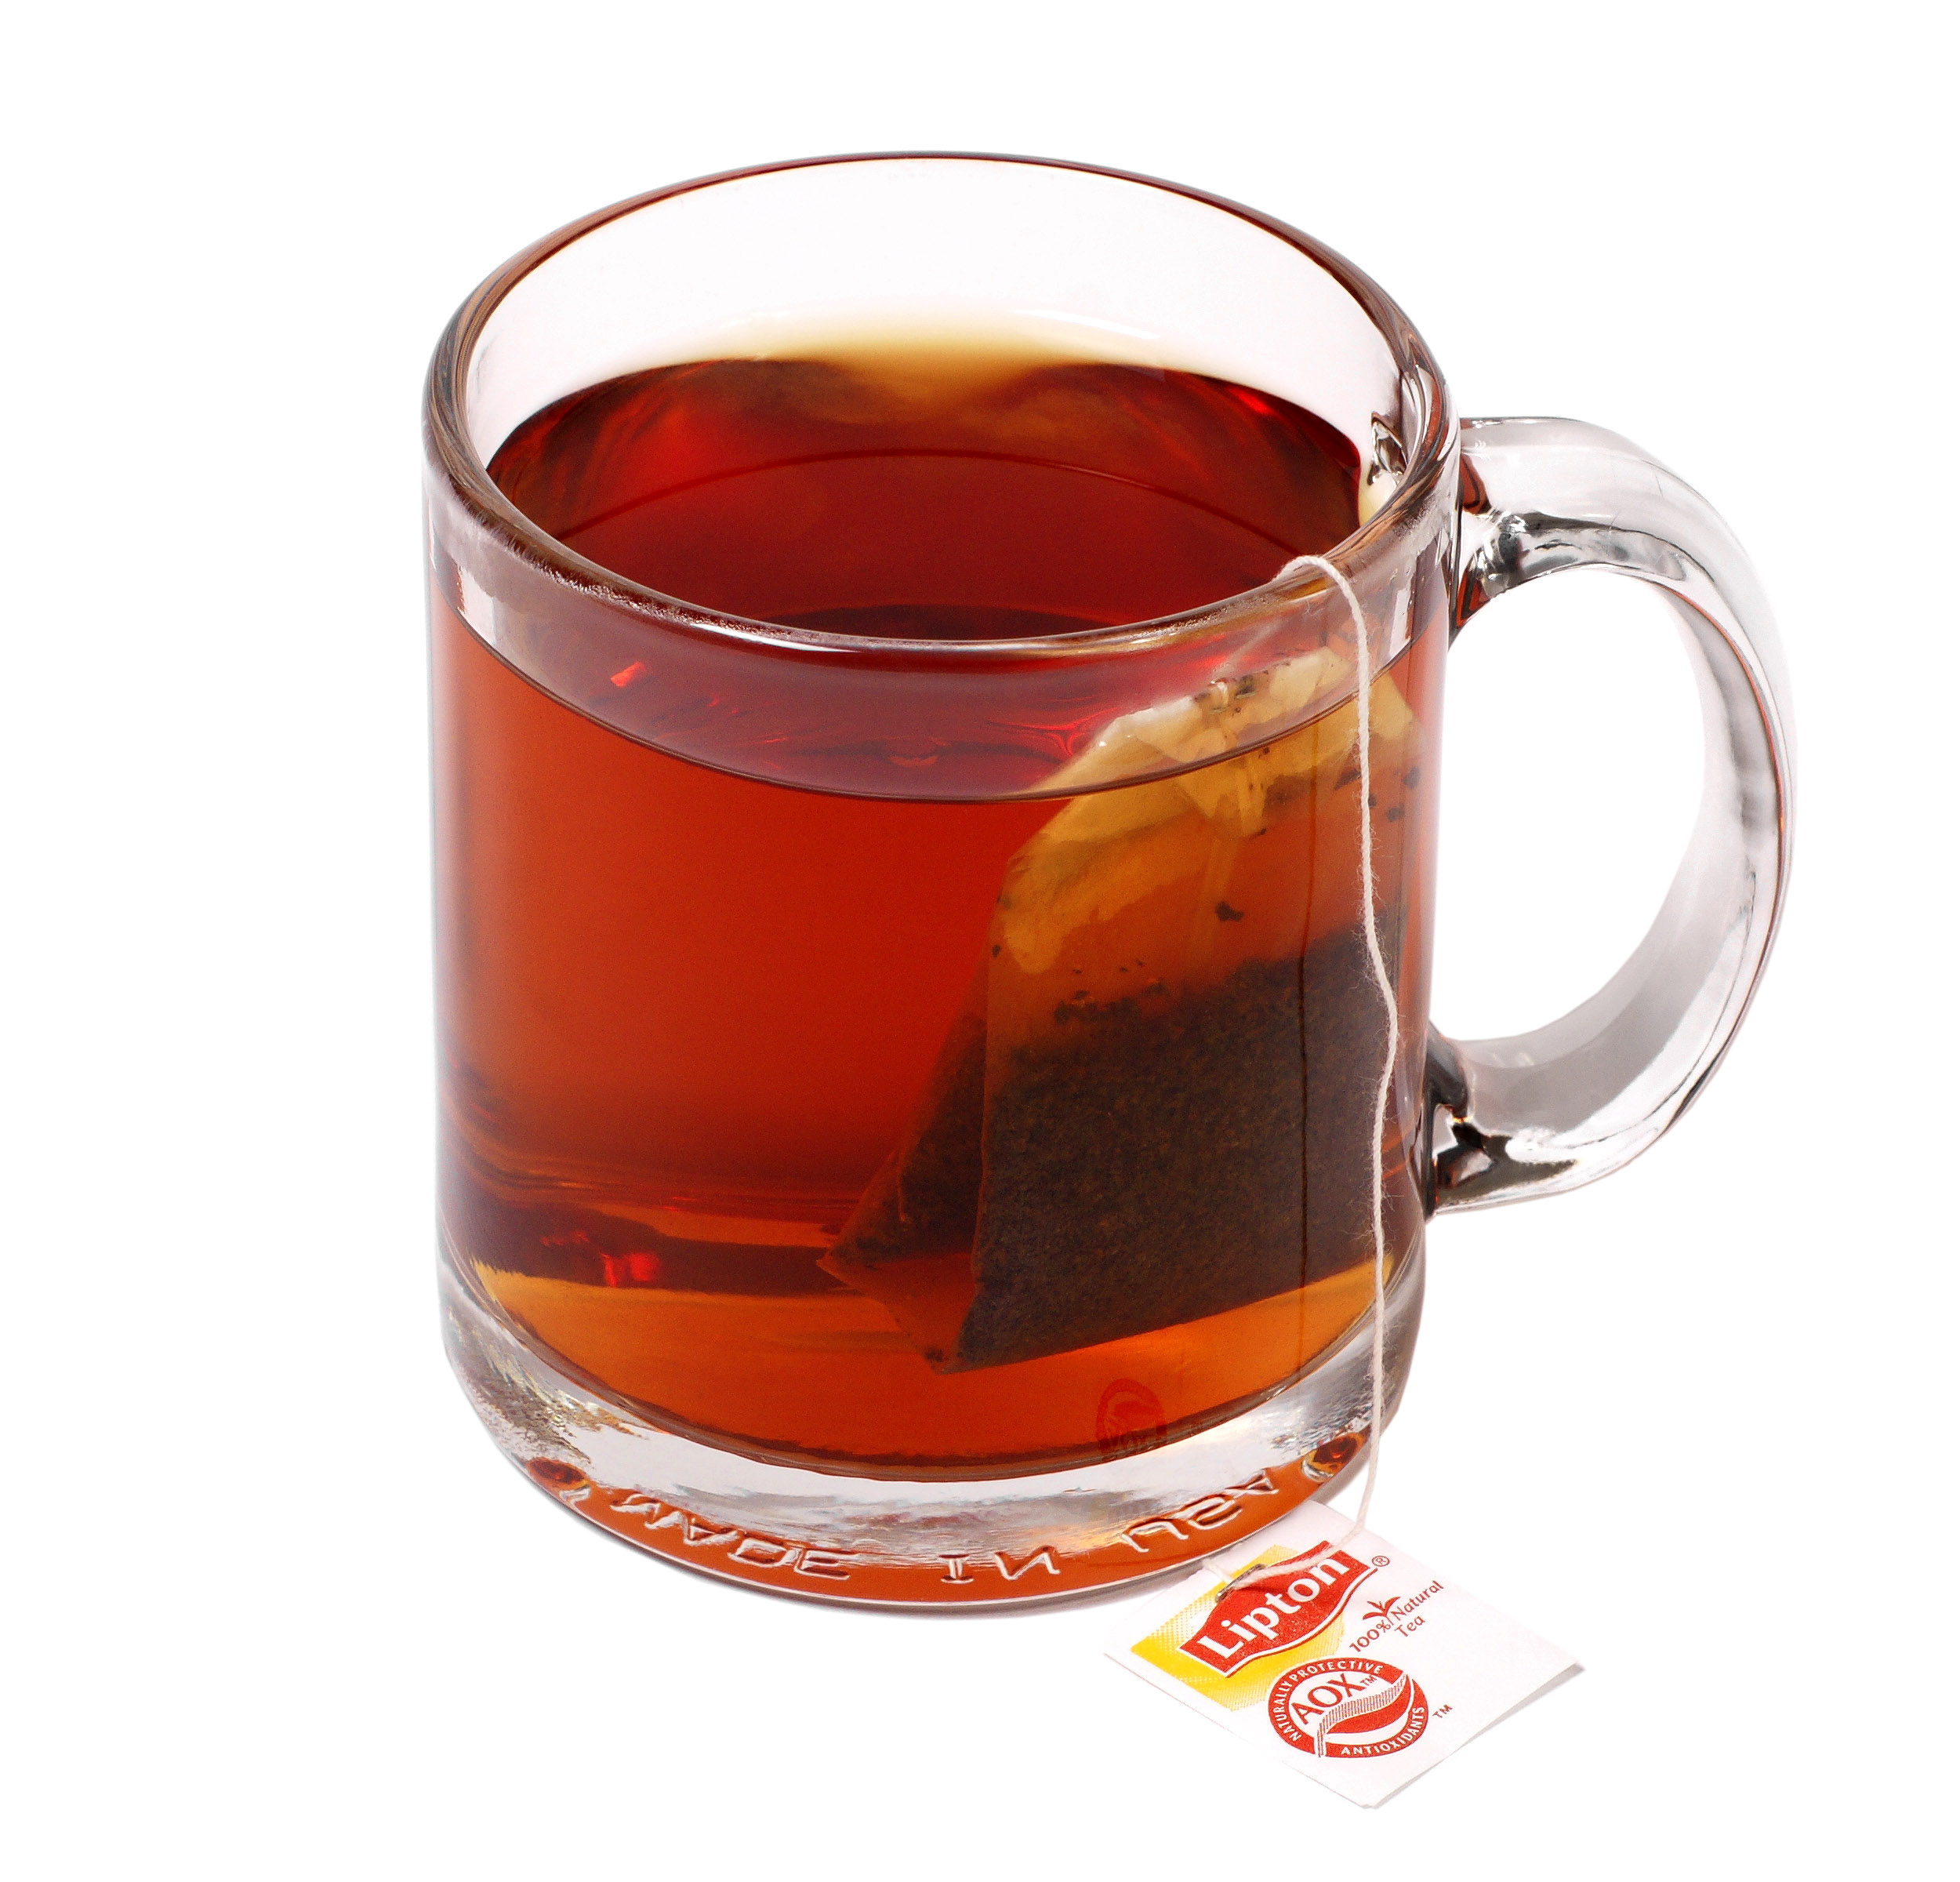 https://upload.wikimedia.org/wikipedia/commons/1/1a/Lipton-mug-tea.jpg